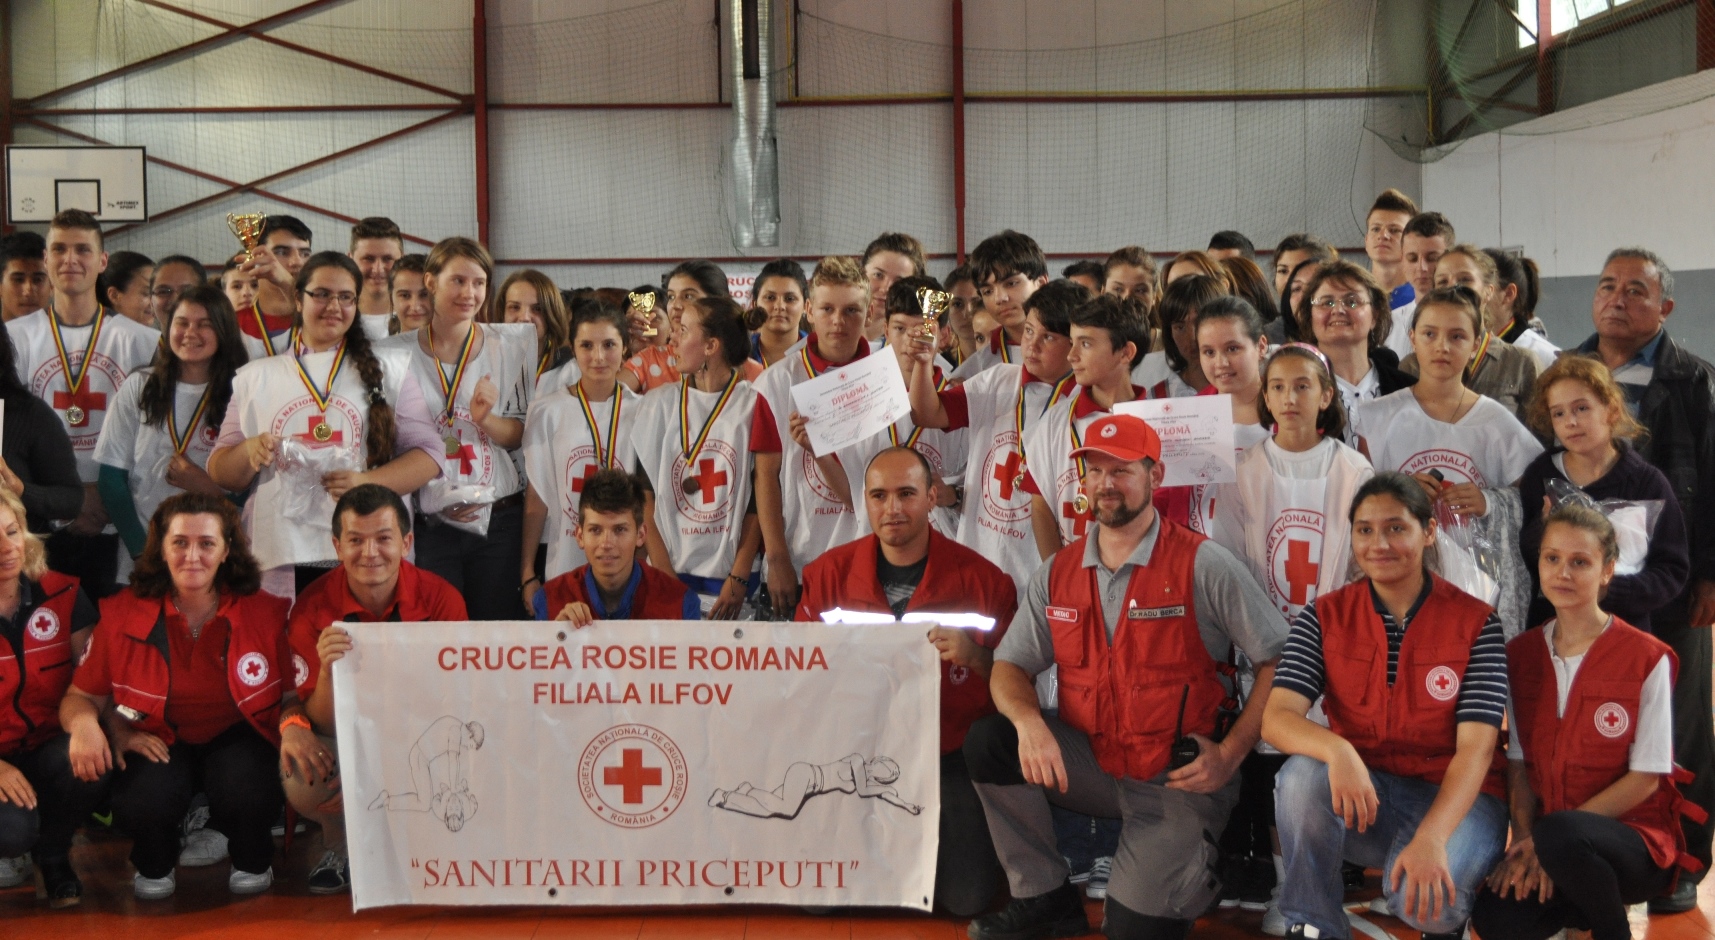 Crucea Rosie Romana Filiala Ilfov - Sanitarii Priceputi 2013